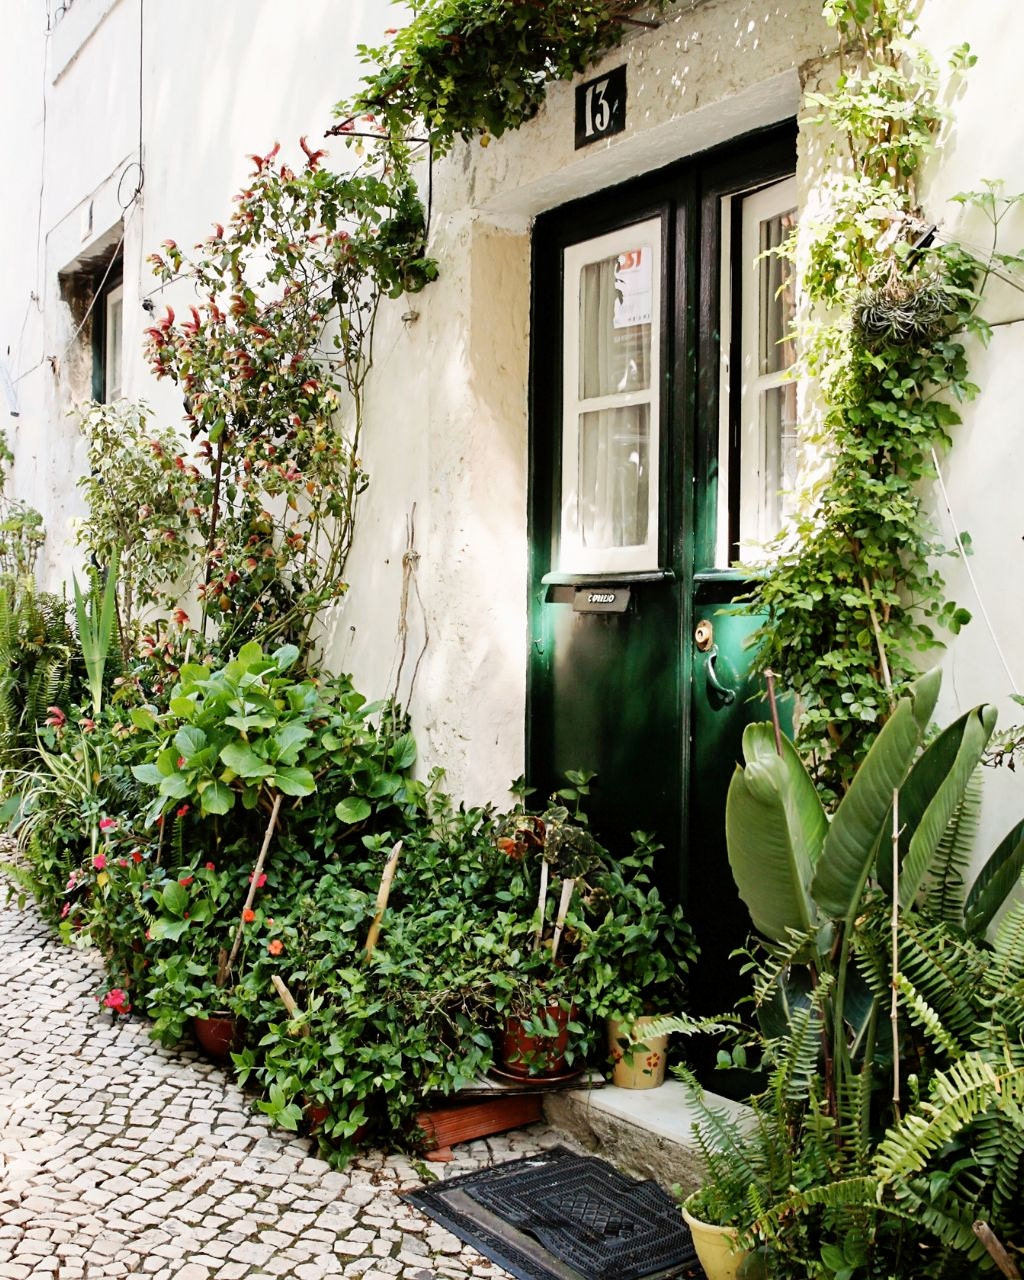 Green Door Photograph - Portugal Photography - Emerald Print - Lush Garden Wall Art Travel Photo - Summer Decor - Fresh Wall Art Ferns - VitaNostra